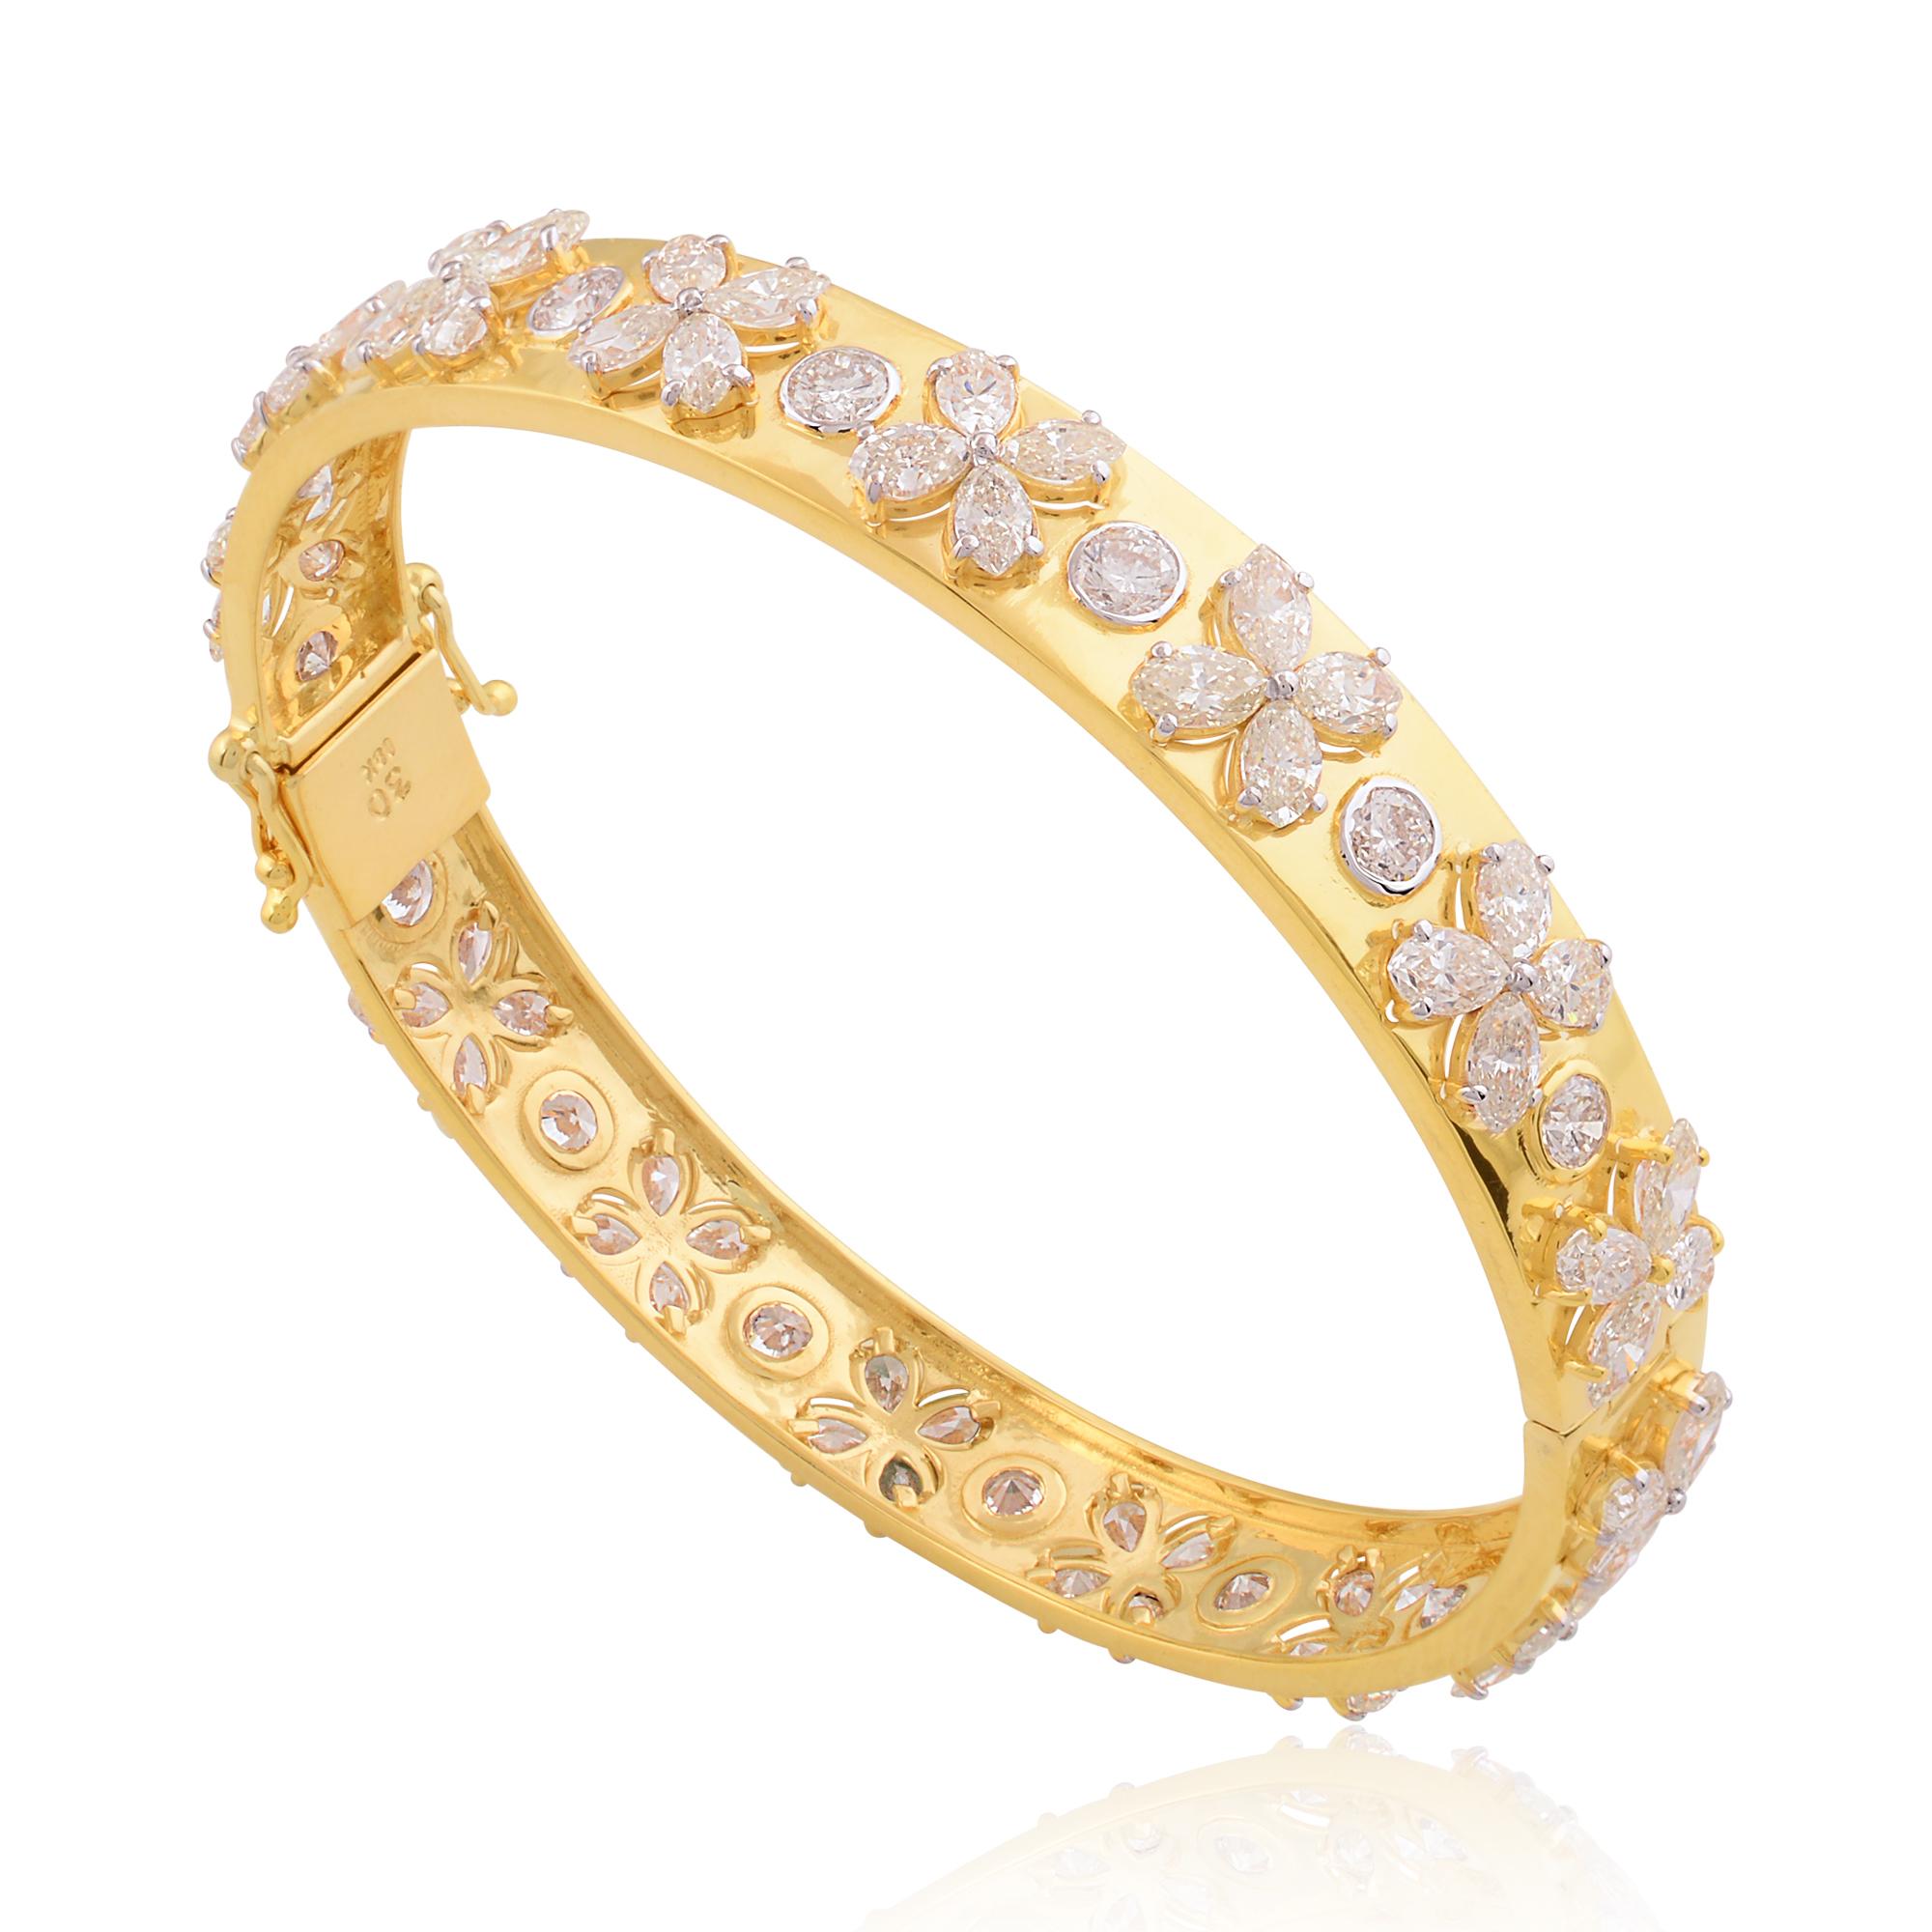 18 carat gold bangles in dubai